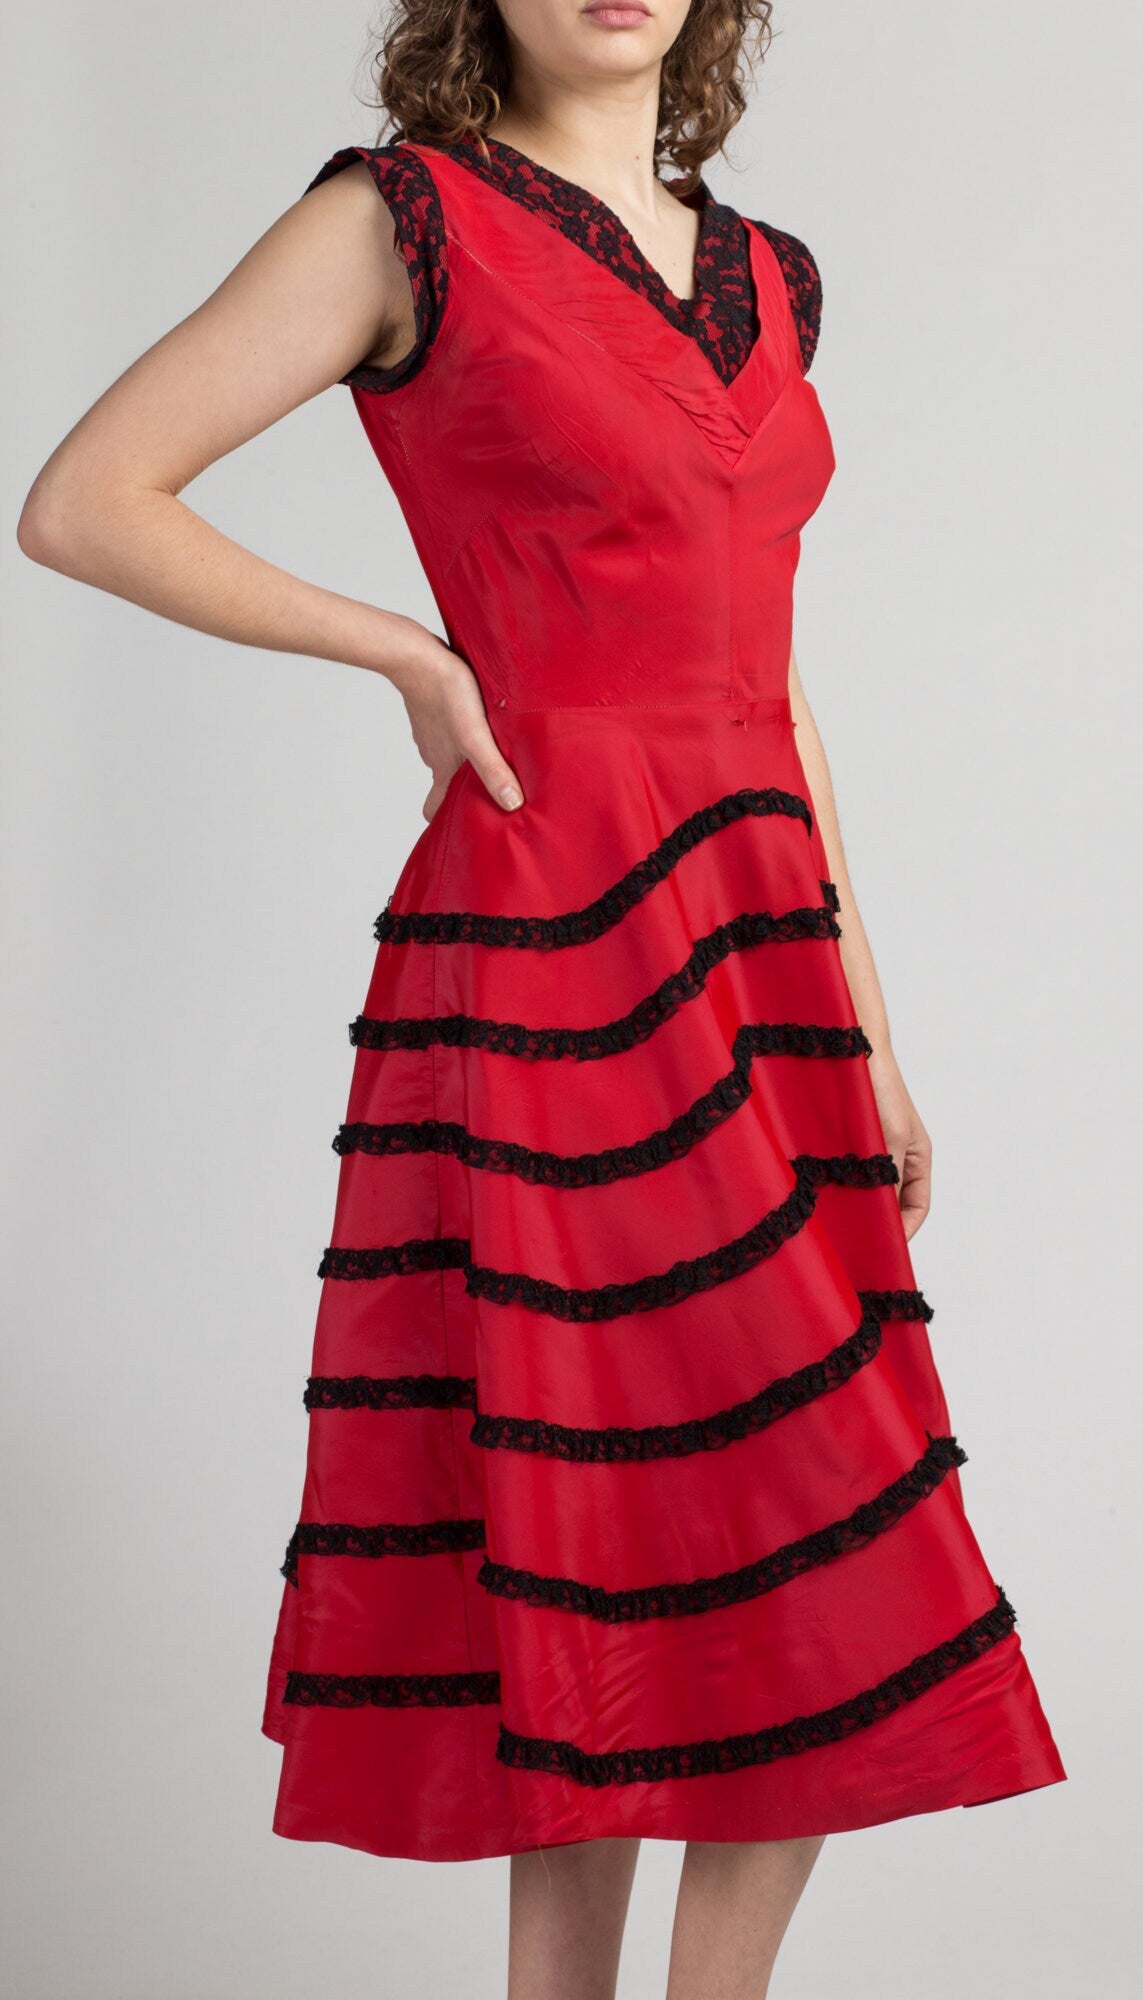 Vintage 1940s Red Lace Trim Midi Dress - Medium 